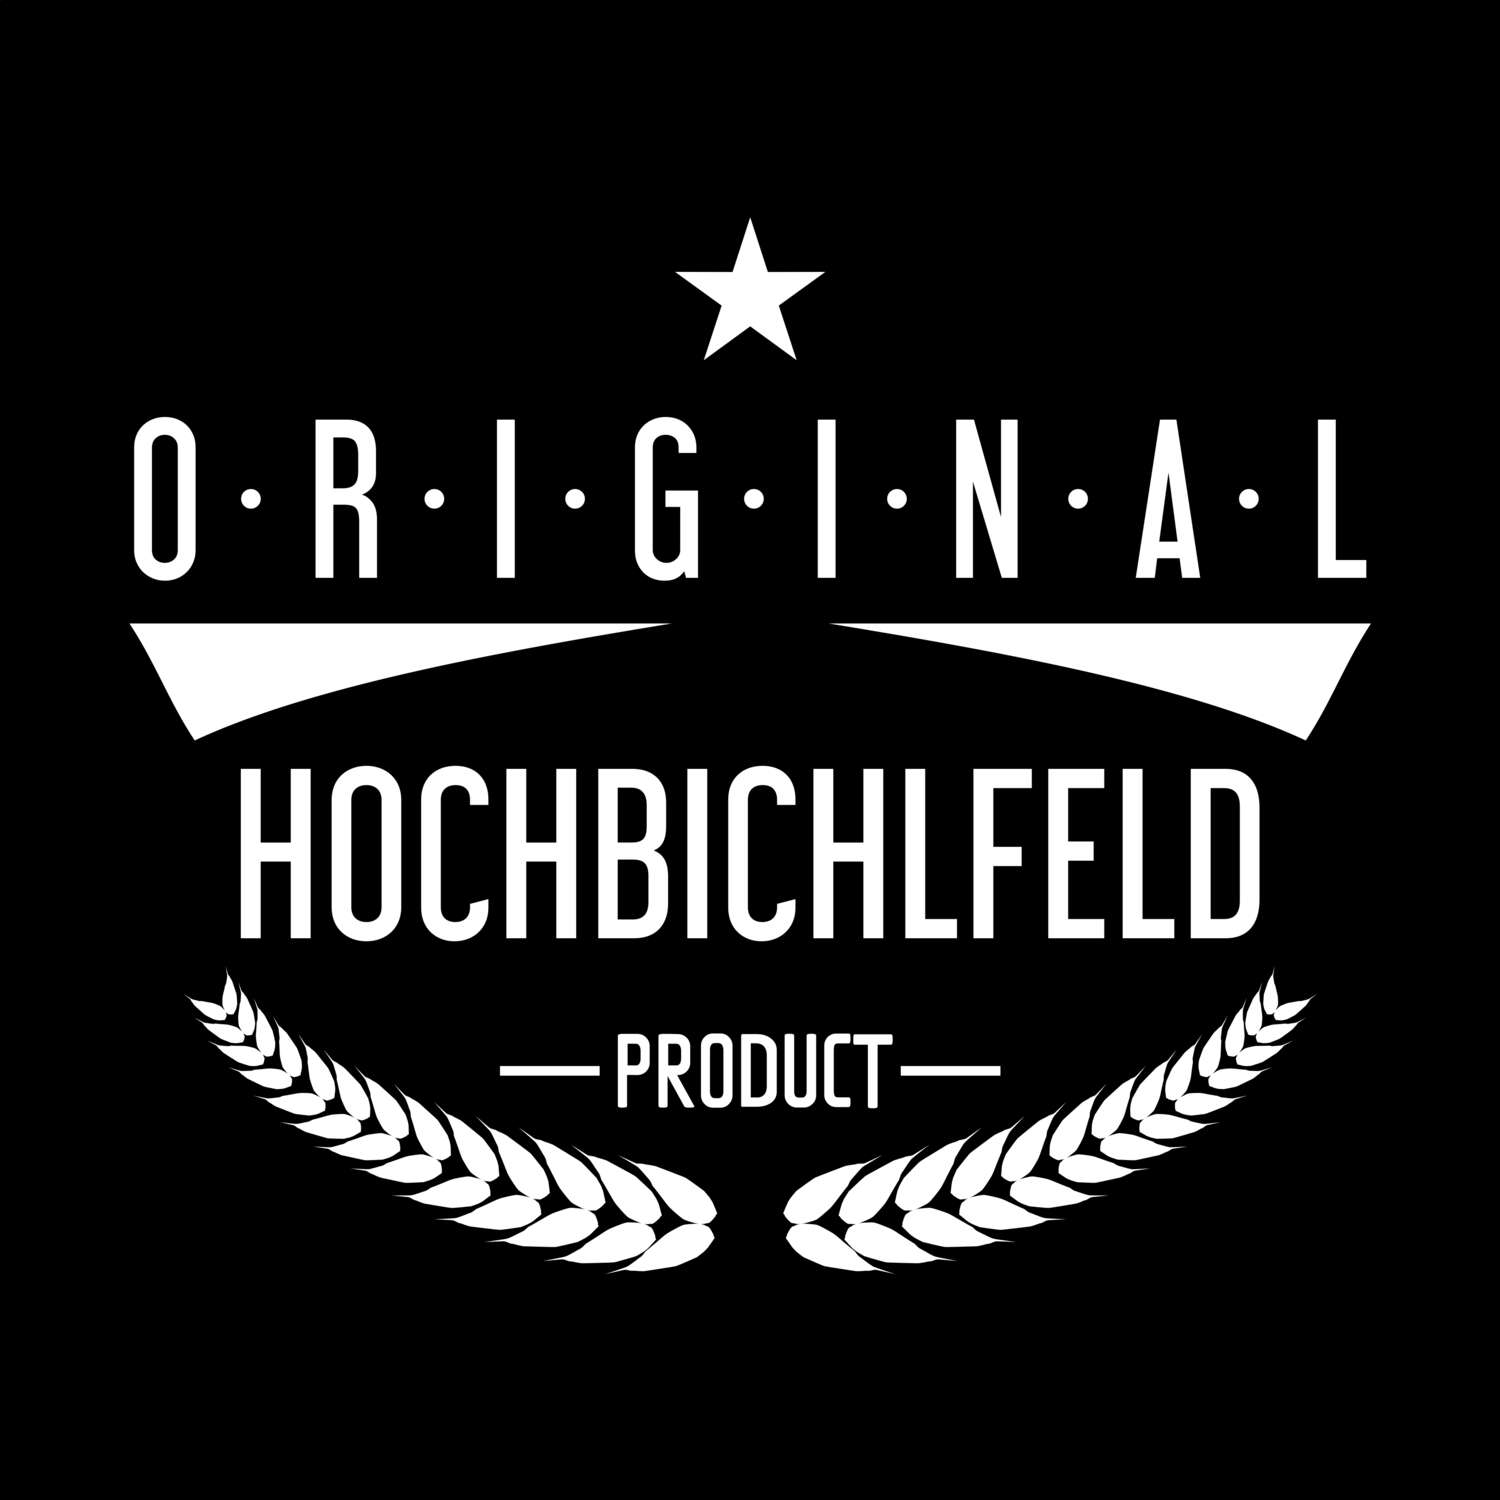 Hochbichlfeld T-Shirt »Original Product«